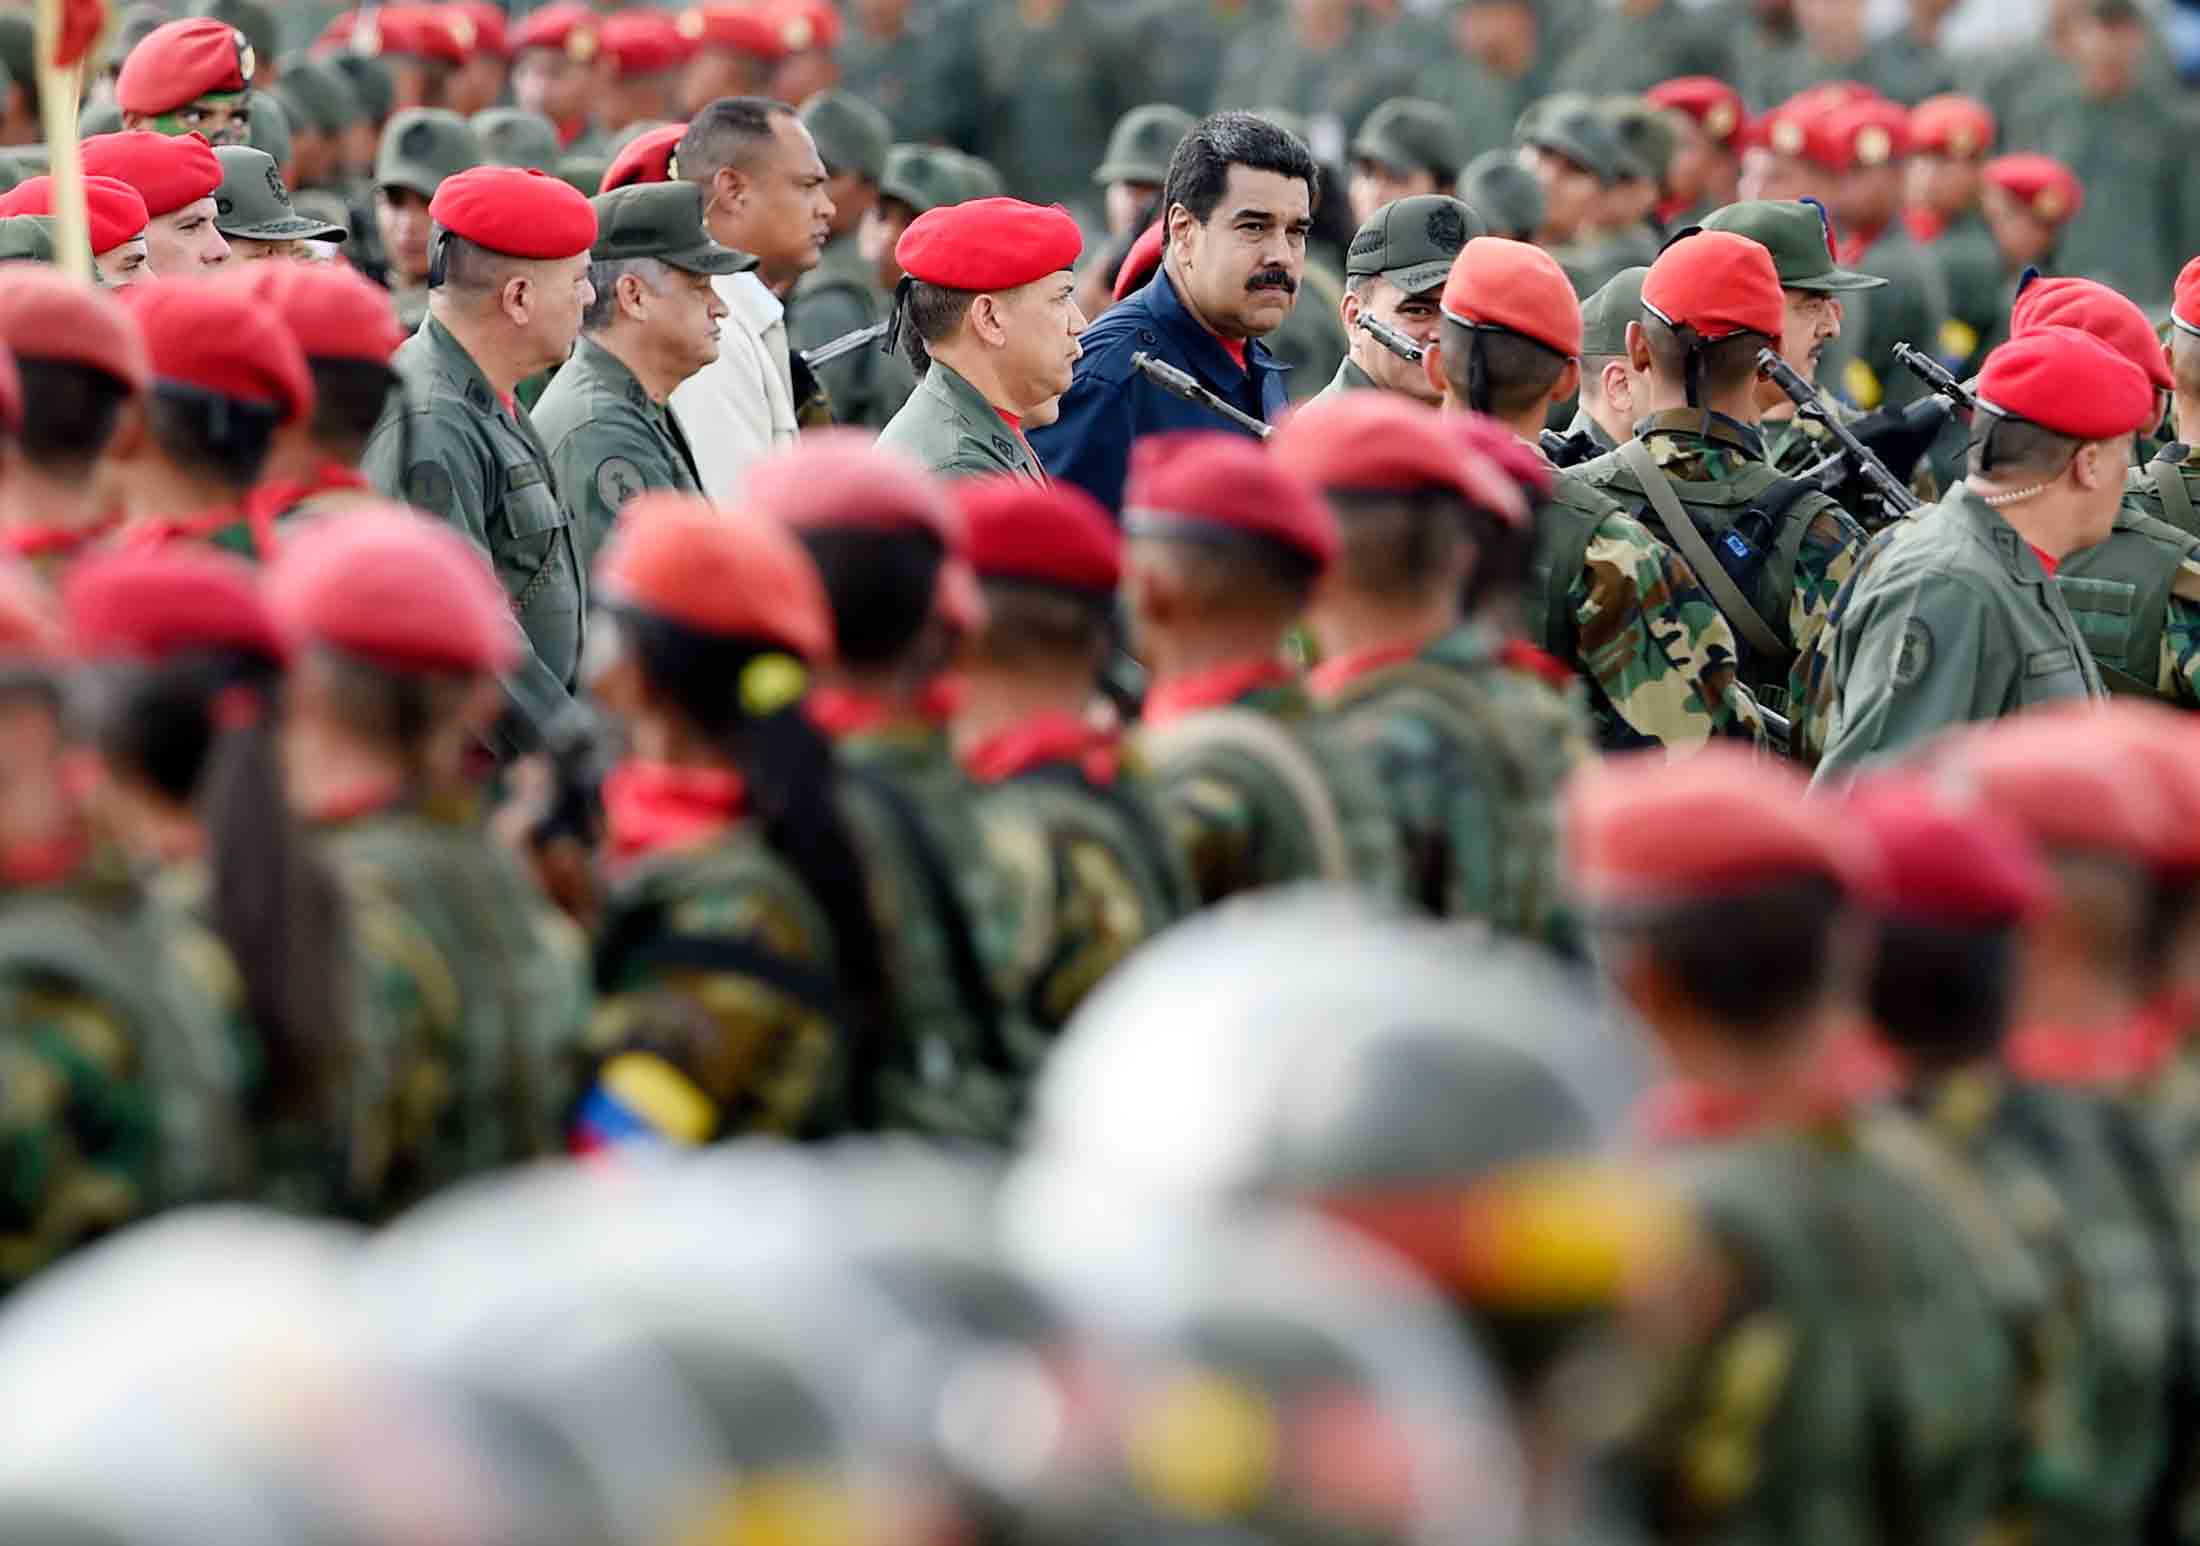 Venezuelan President Nicolas Maduro walks during a military parade in Caracas on Dec. 12, 2015.
